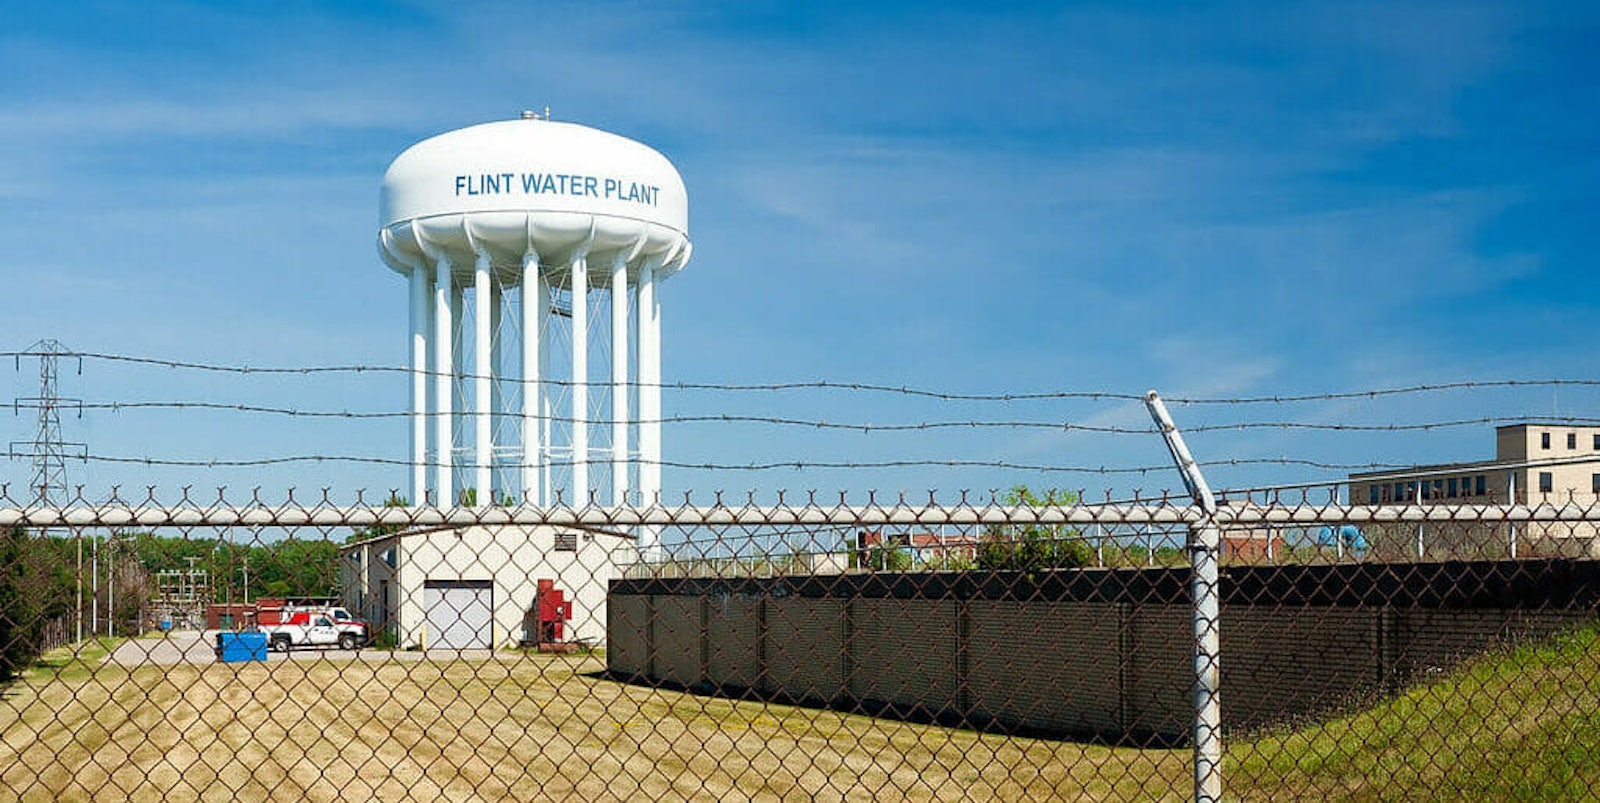 flint water crisis